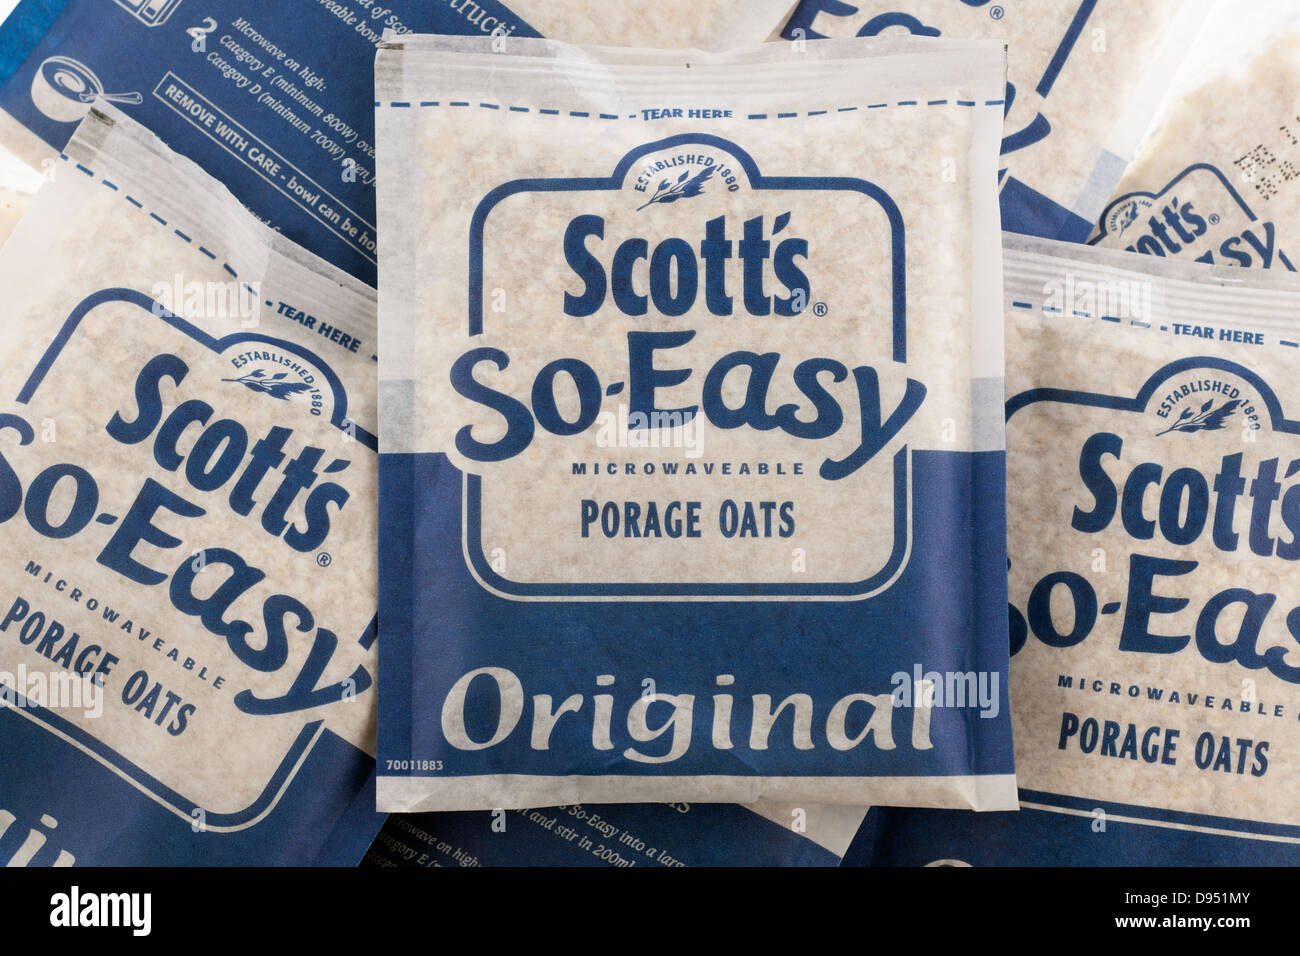 Sachets of Scotts SO Easy microwaveable original porage oats Stock Photo